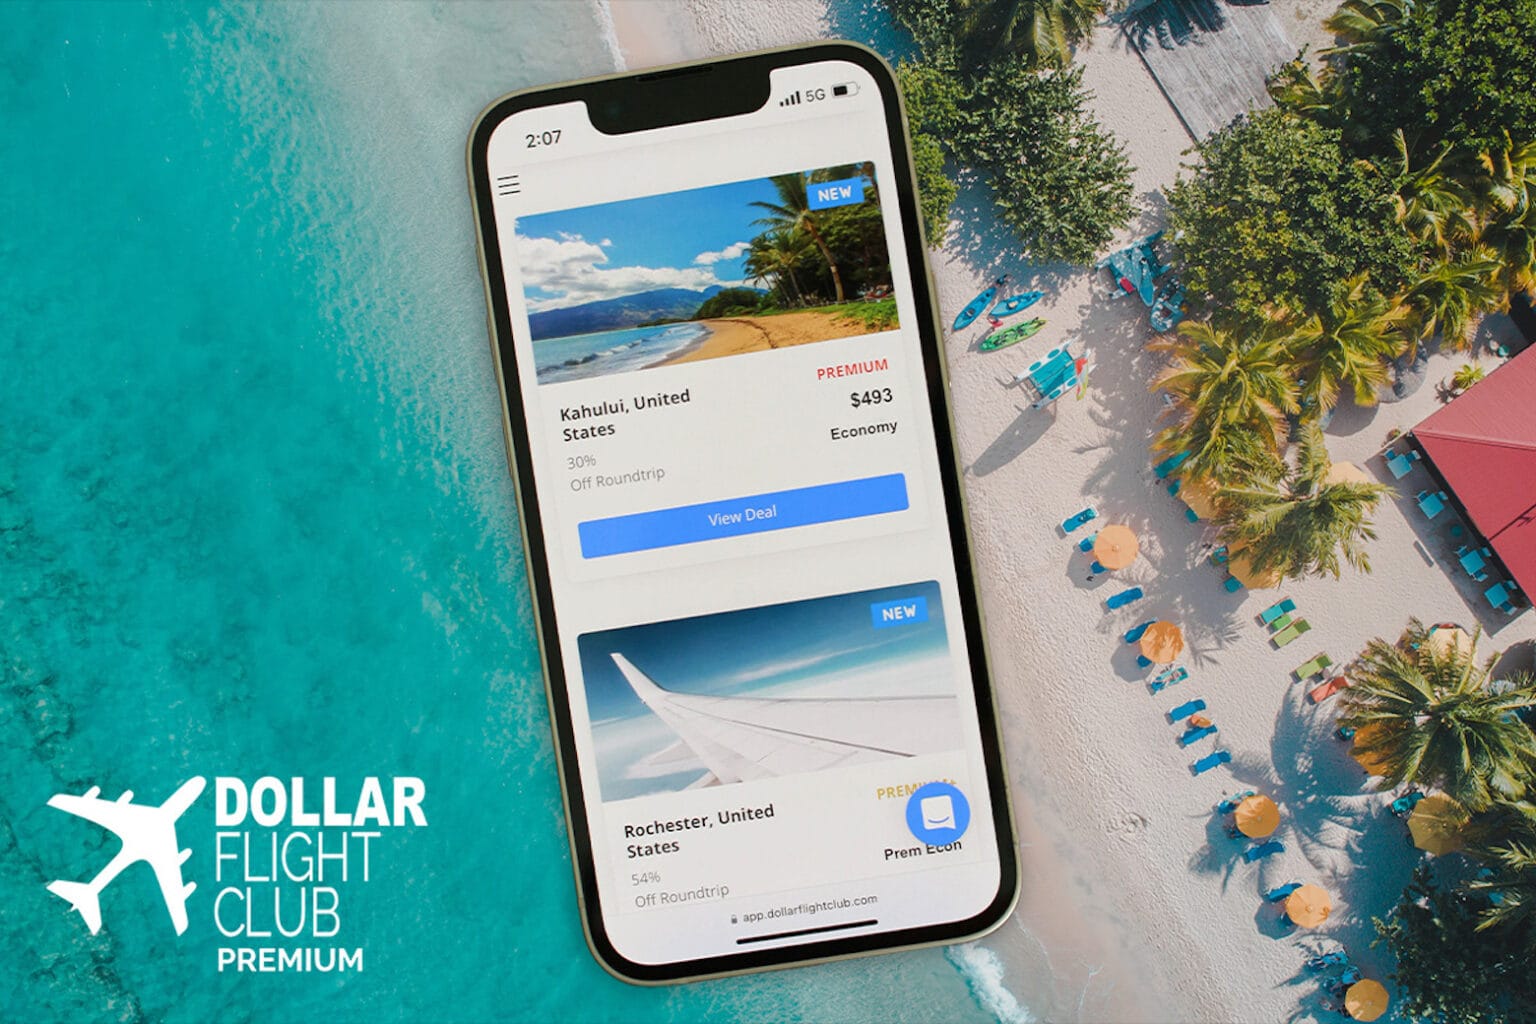 Grab a Dollar Flight Club membership for less than $50 to save on airfare.